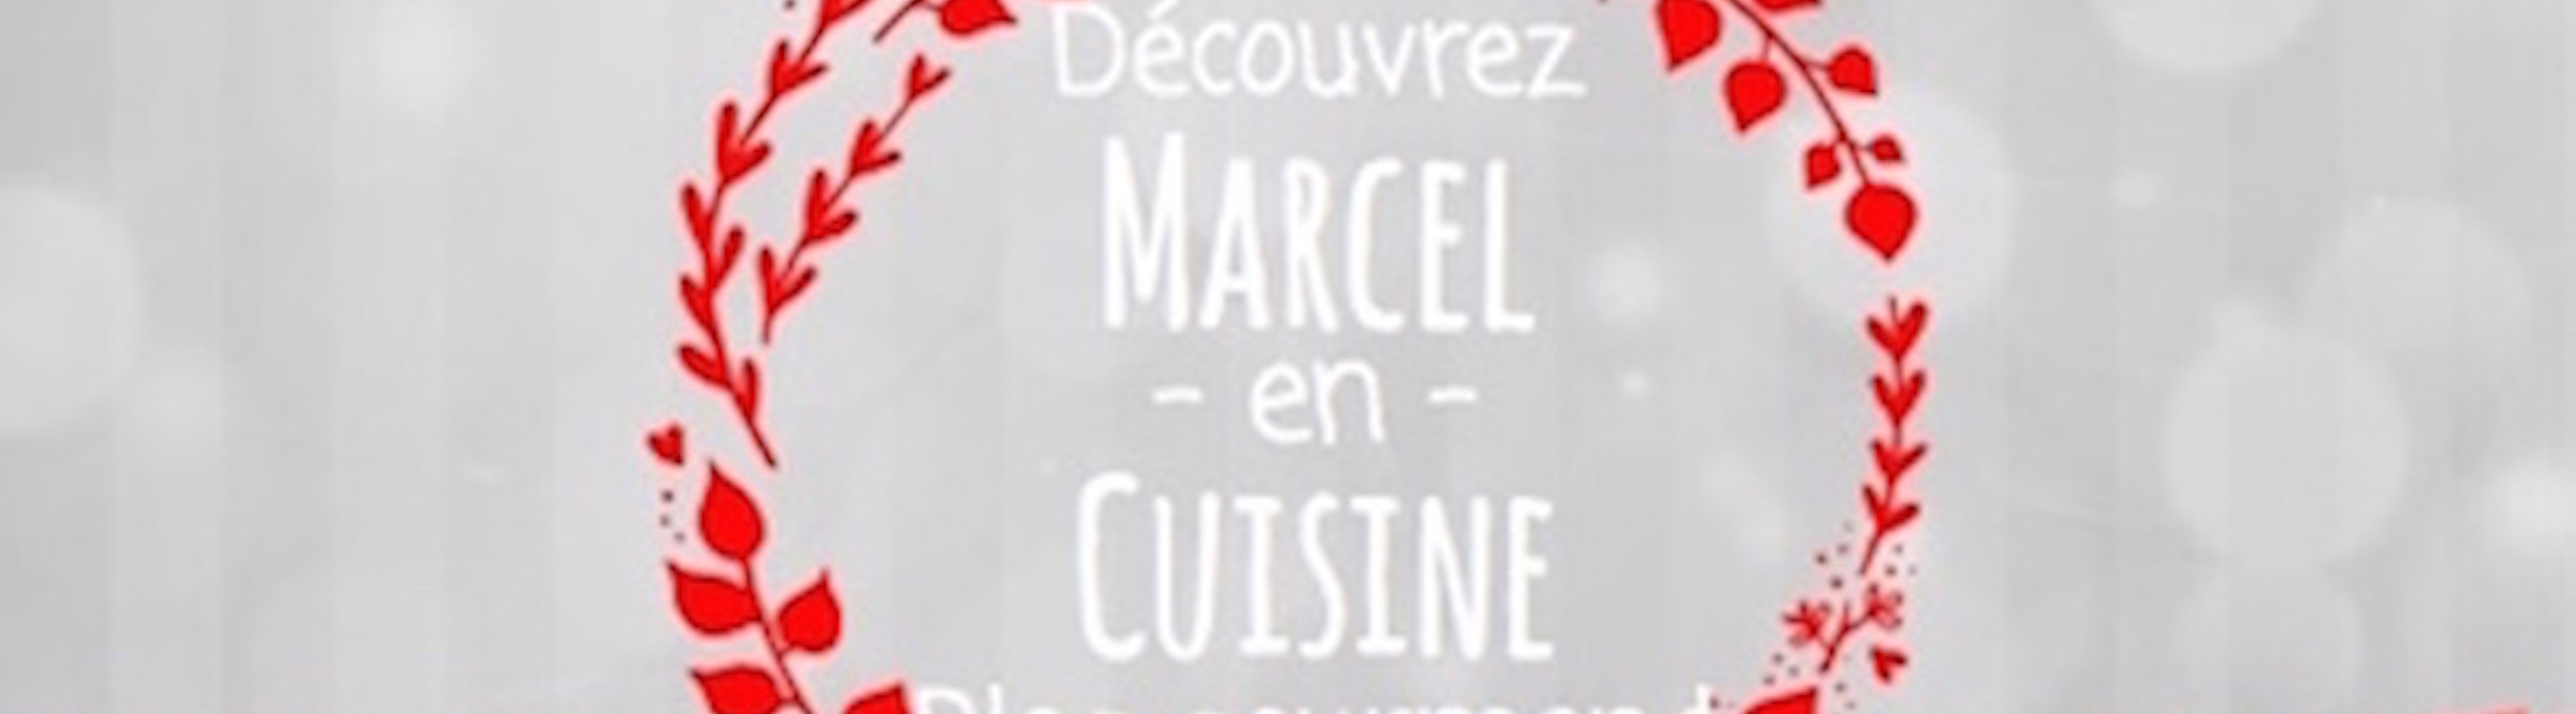 Marcel en Cuisine